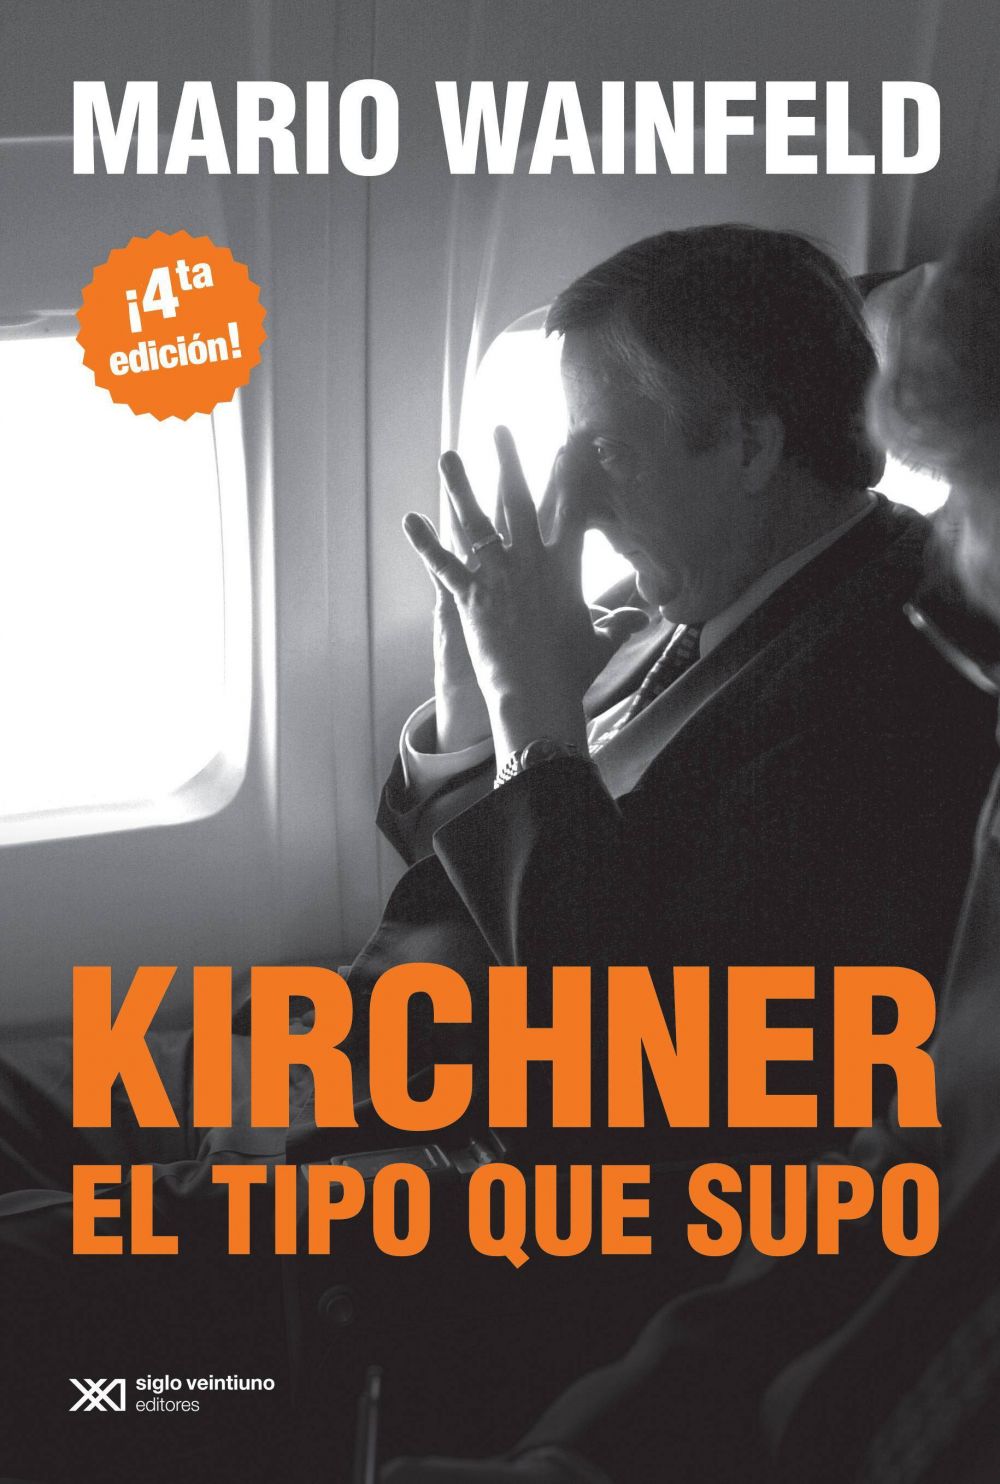 [#EsteJueves] Mario Wainfeld presentar Nstor Kirchner, el tipo que supo